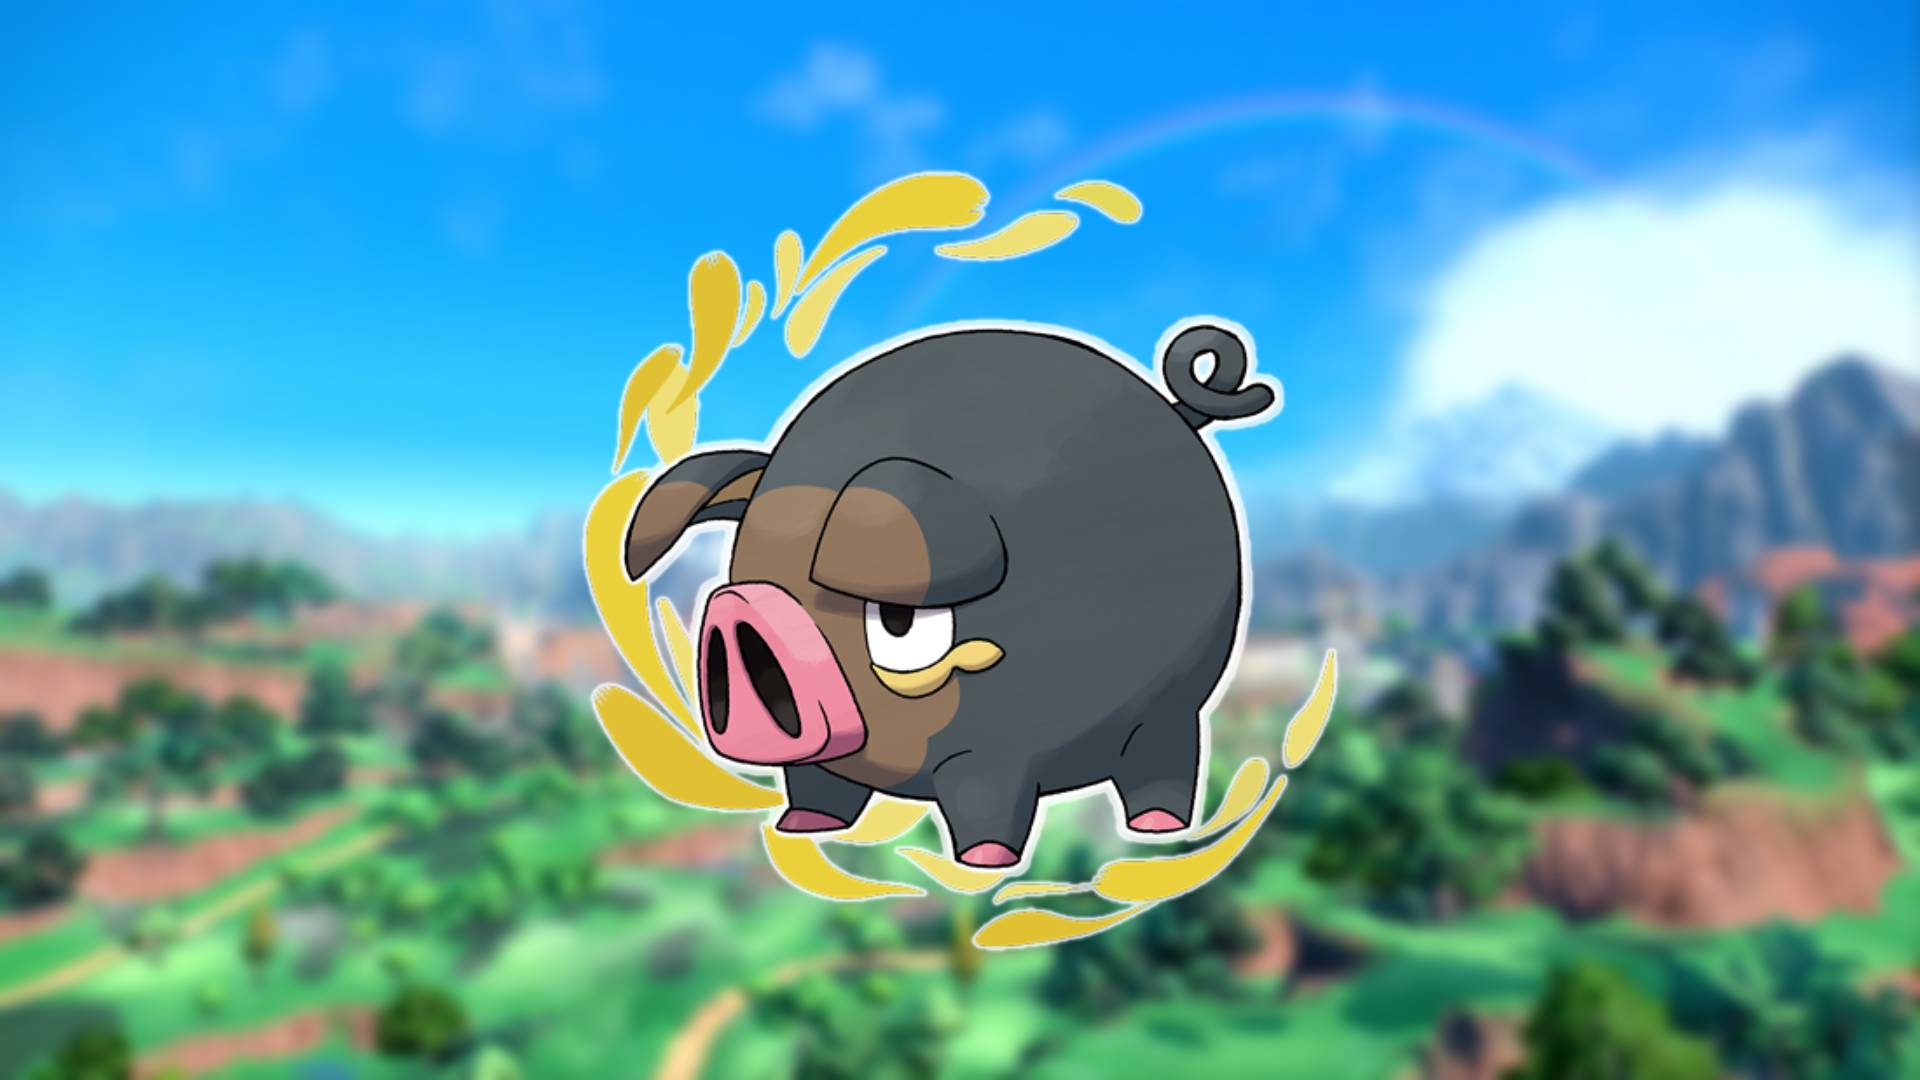 Pokémon Escarlata y Violeta nuevo Pokémon: se ve un Pokémon que parece un cerdo